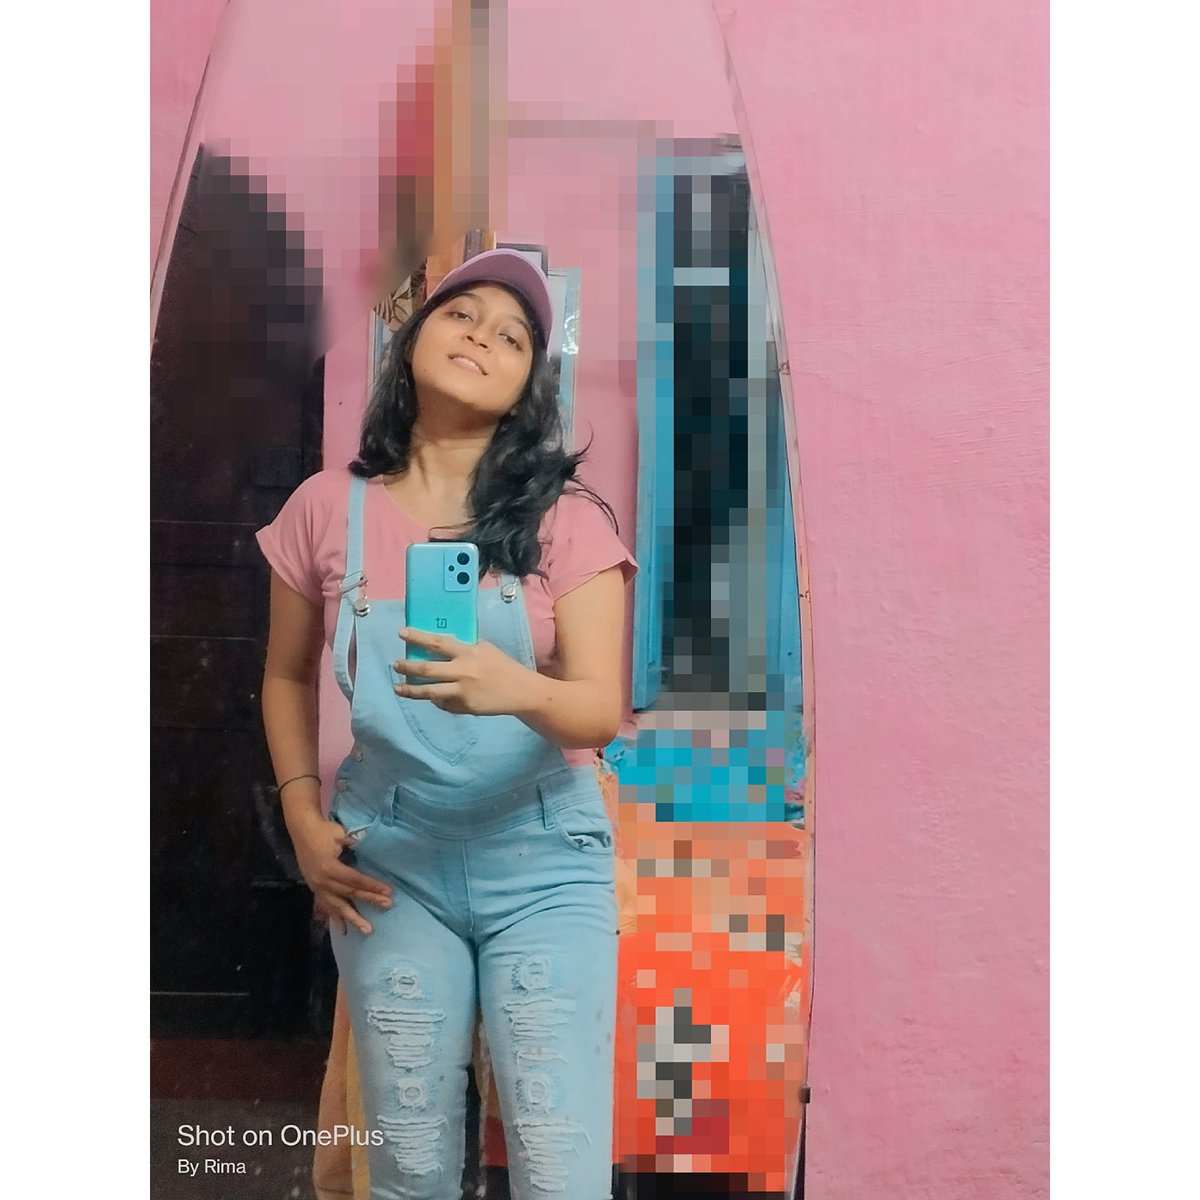 Mirror selfie's game is on pointtt! 🪞🤳🏽
.
.
.
.
.
#mirrorselfie #mirrors #mirrorselfie📷 #mirrorpic #mirror #pose #instagood #instadaily #instagram #instalike #instafaishon #instagramindia #fetured #explore #viralpost #fyp #followforfollowback